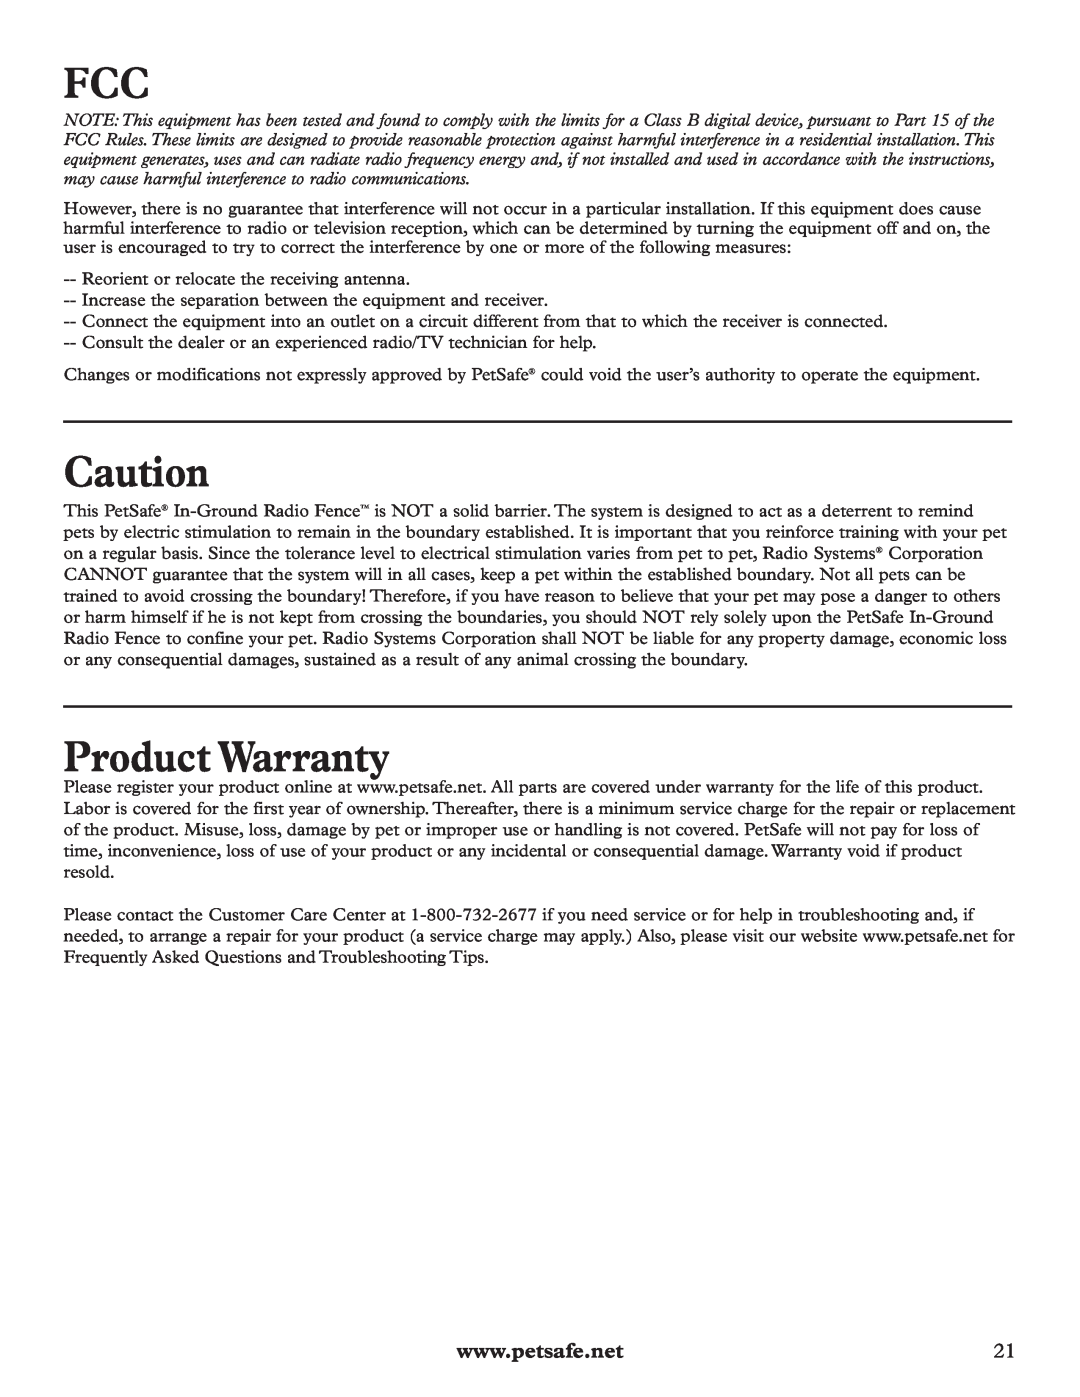 Petsafe RFA-200 manual Product Warranty 